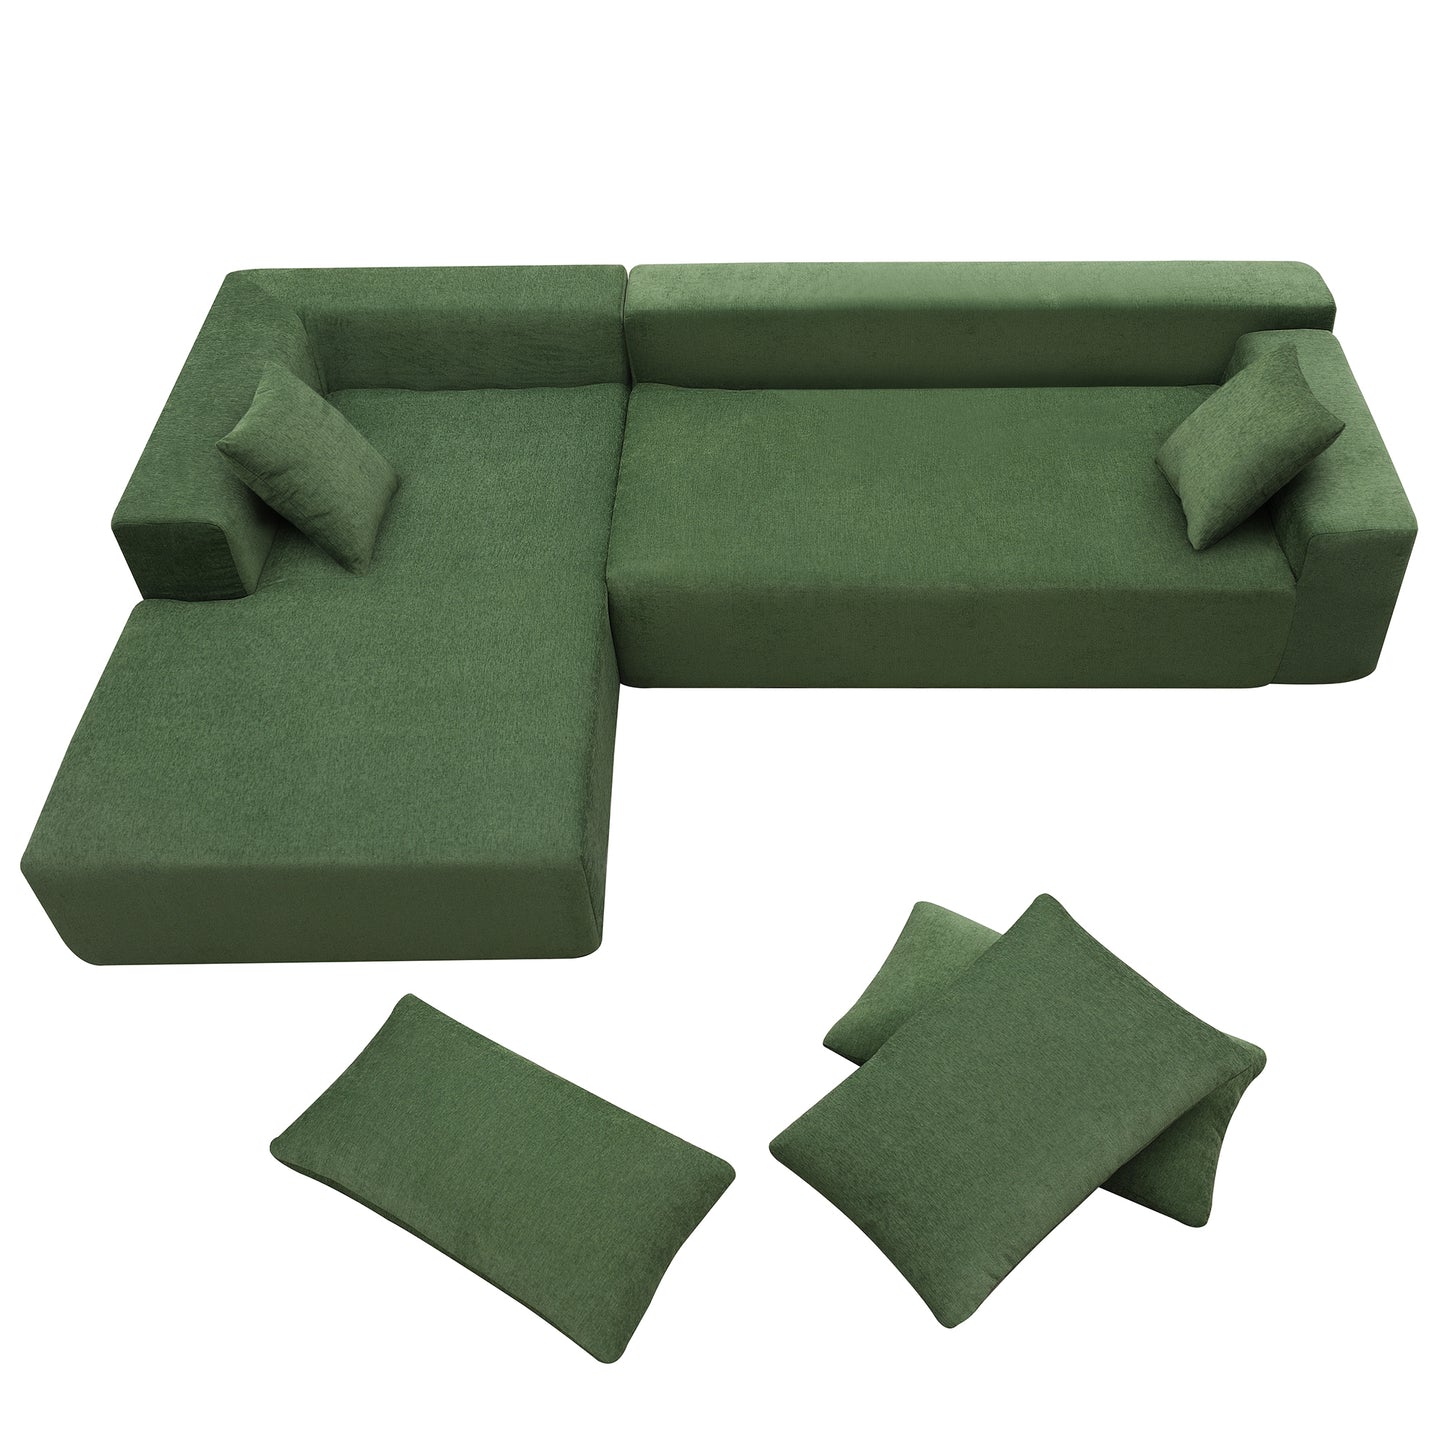 109*68 Green Upholstered Sleeper Sofa Set with L-Shape Design